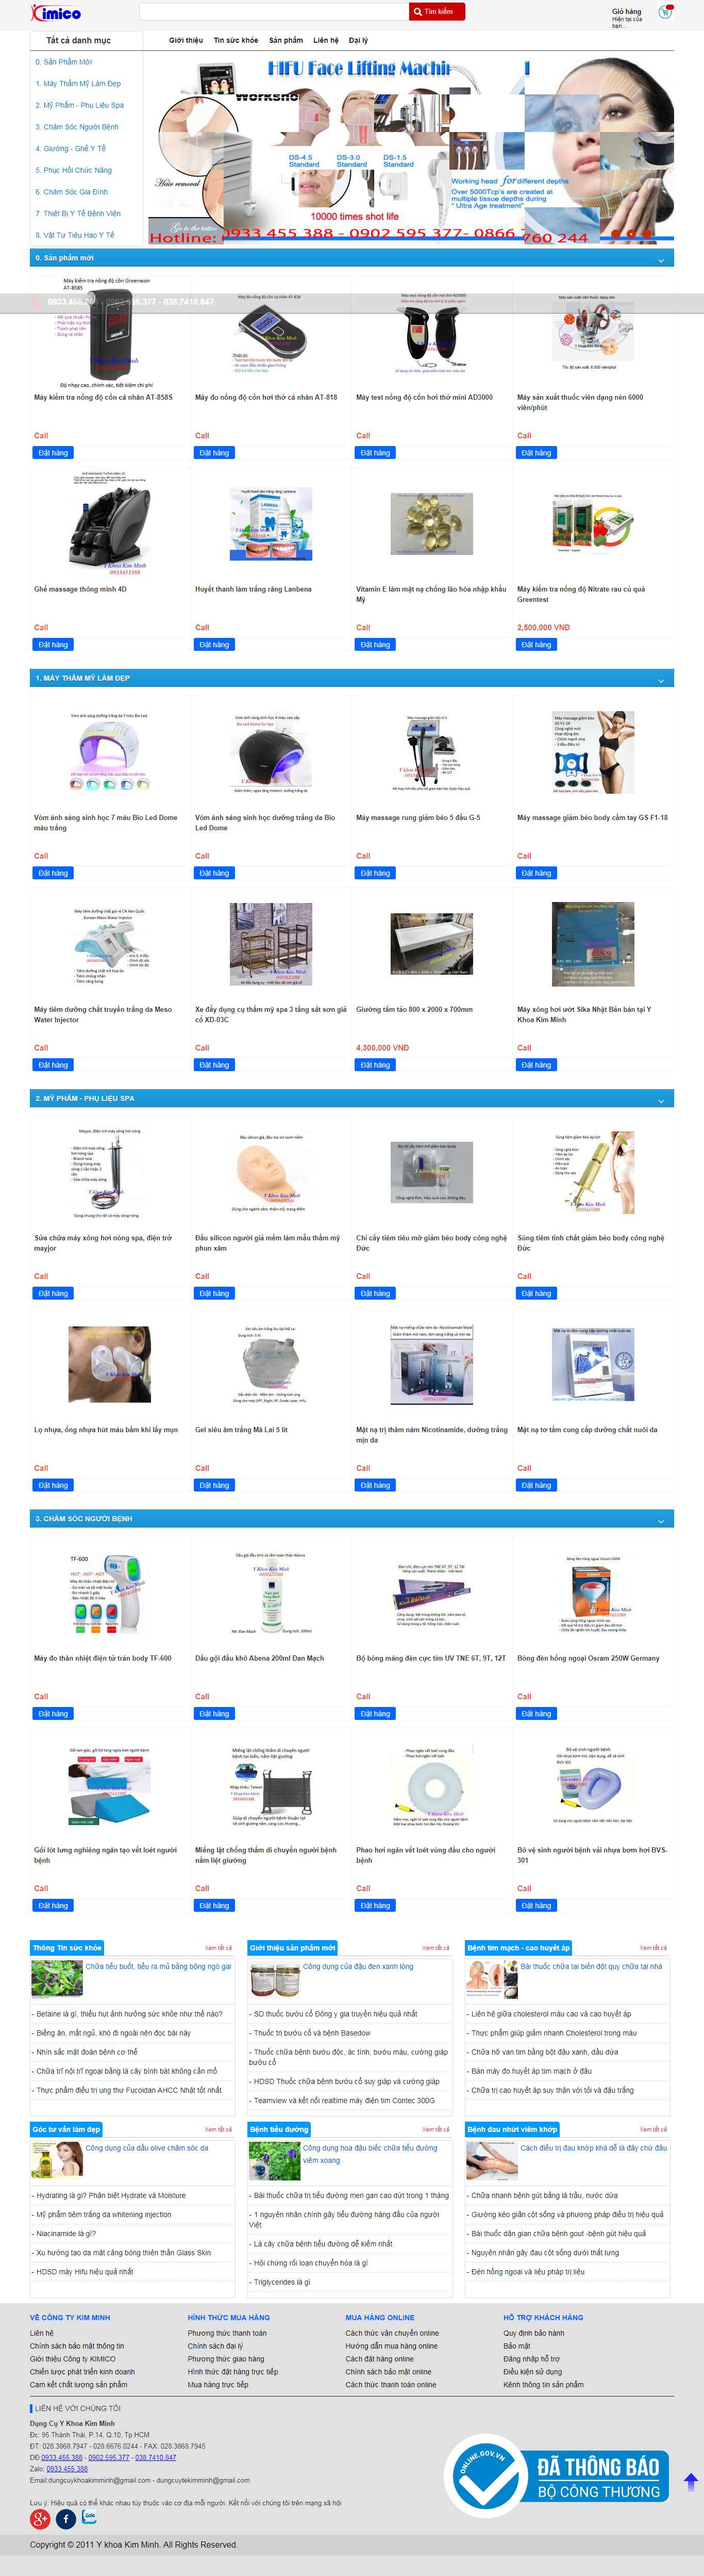 Thiết kế Website dụng cụ y tế - dungcuykhoakimminh.com